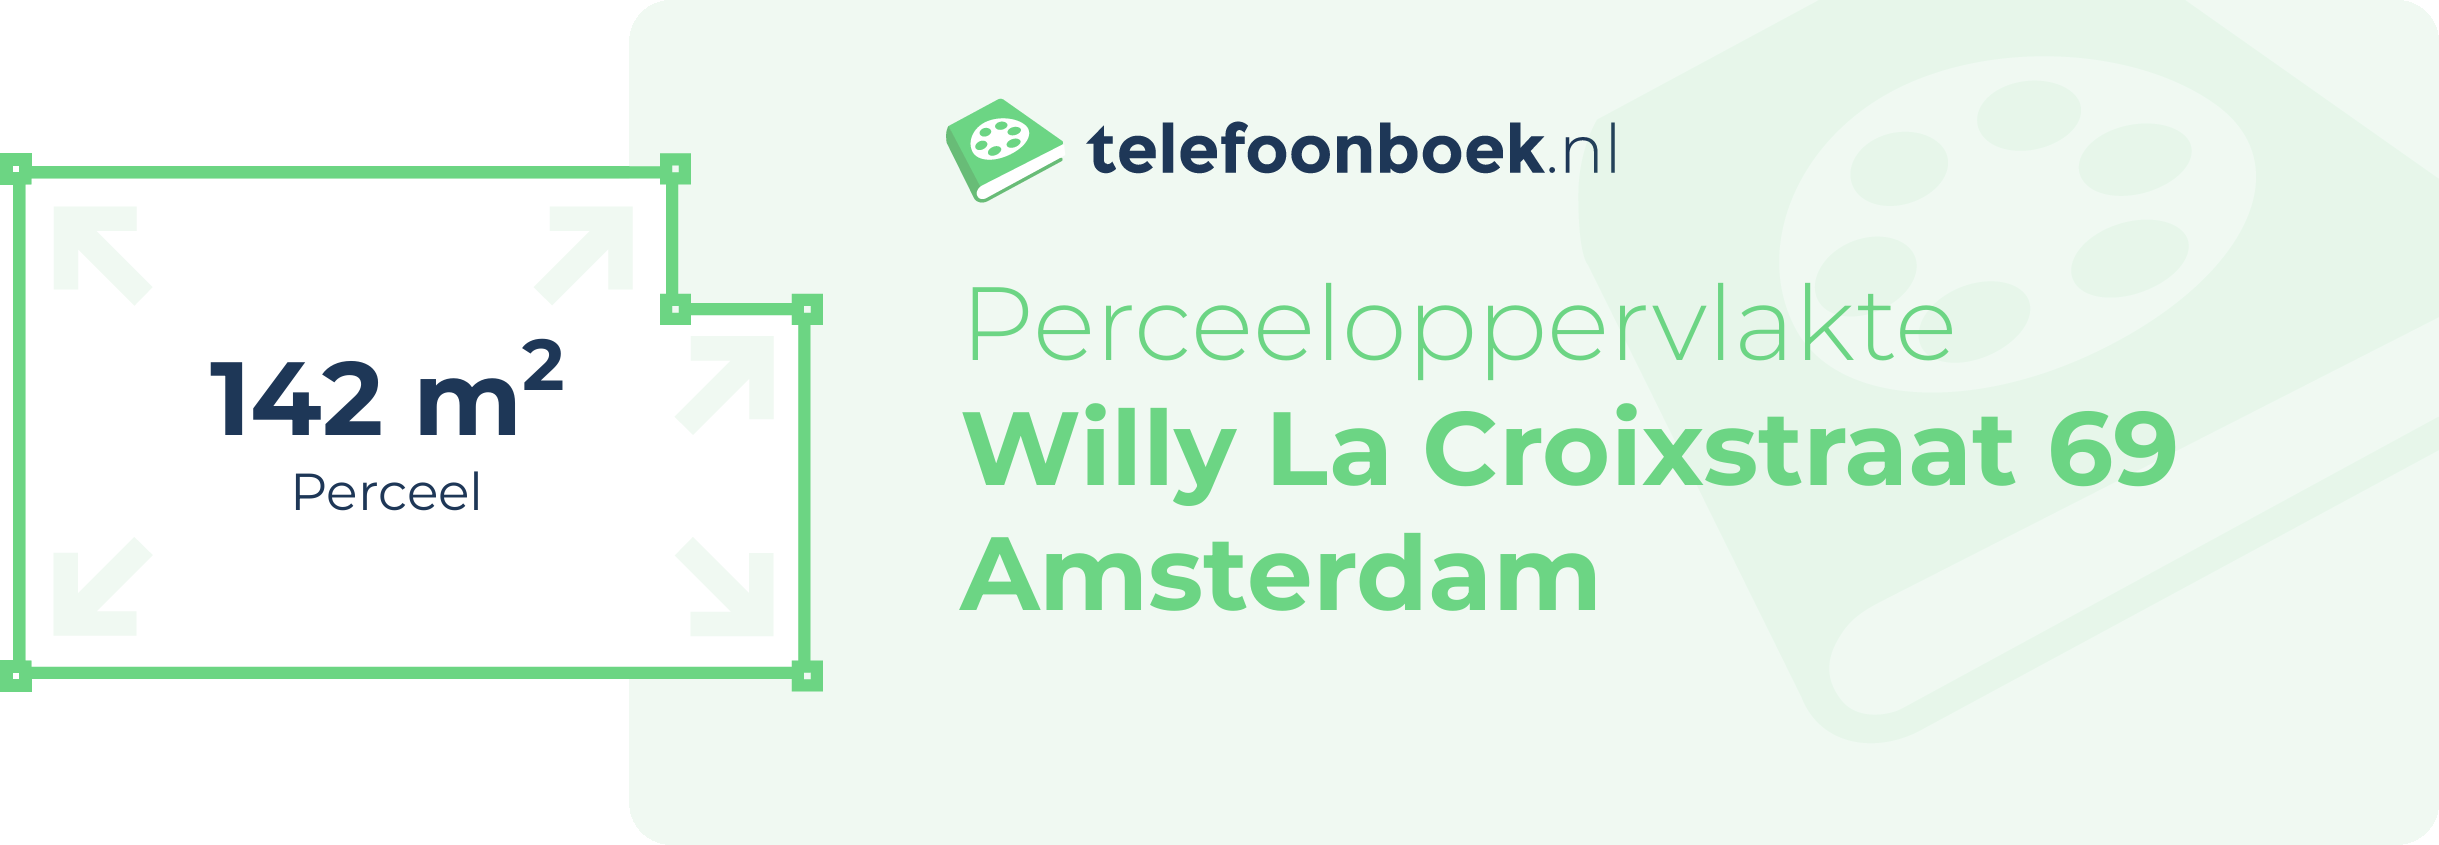 Perceeloppervlakte Willy La Croixstraat 69 Amsterdam